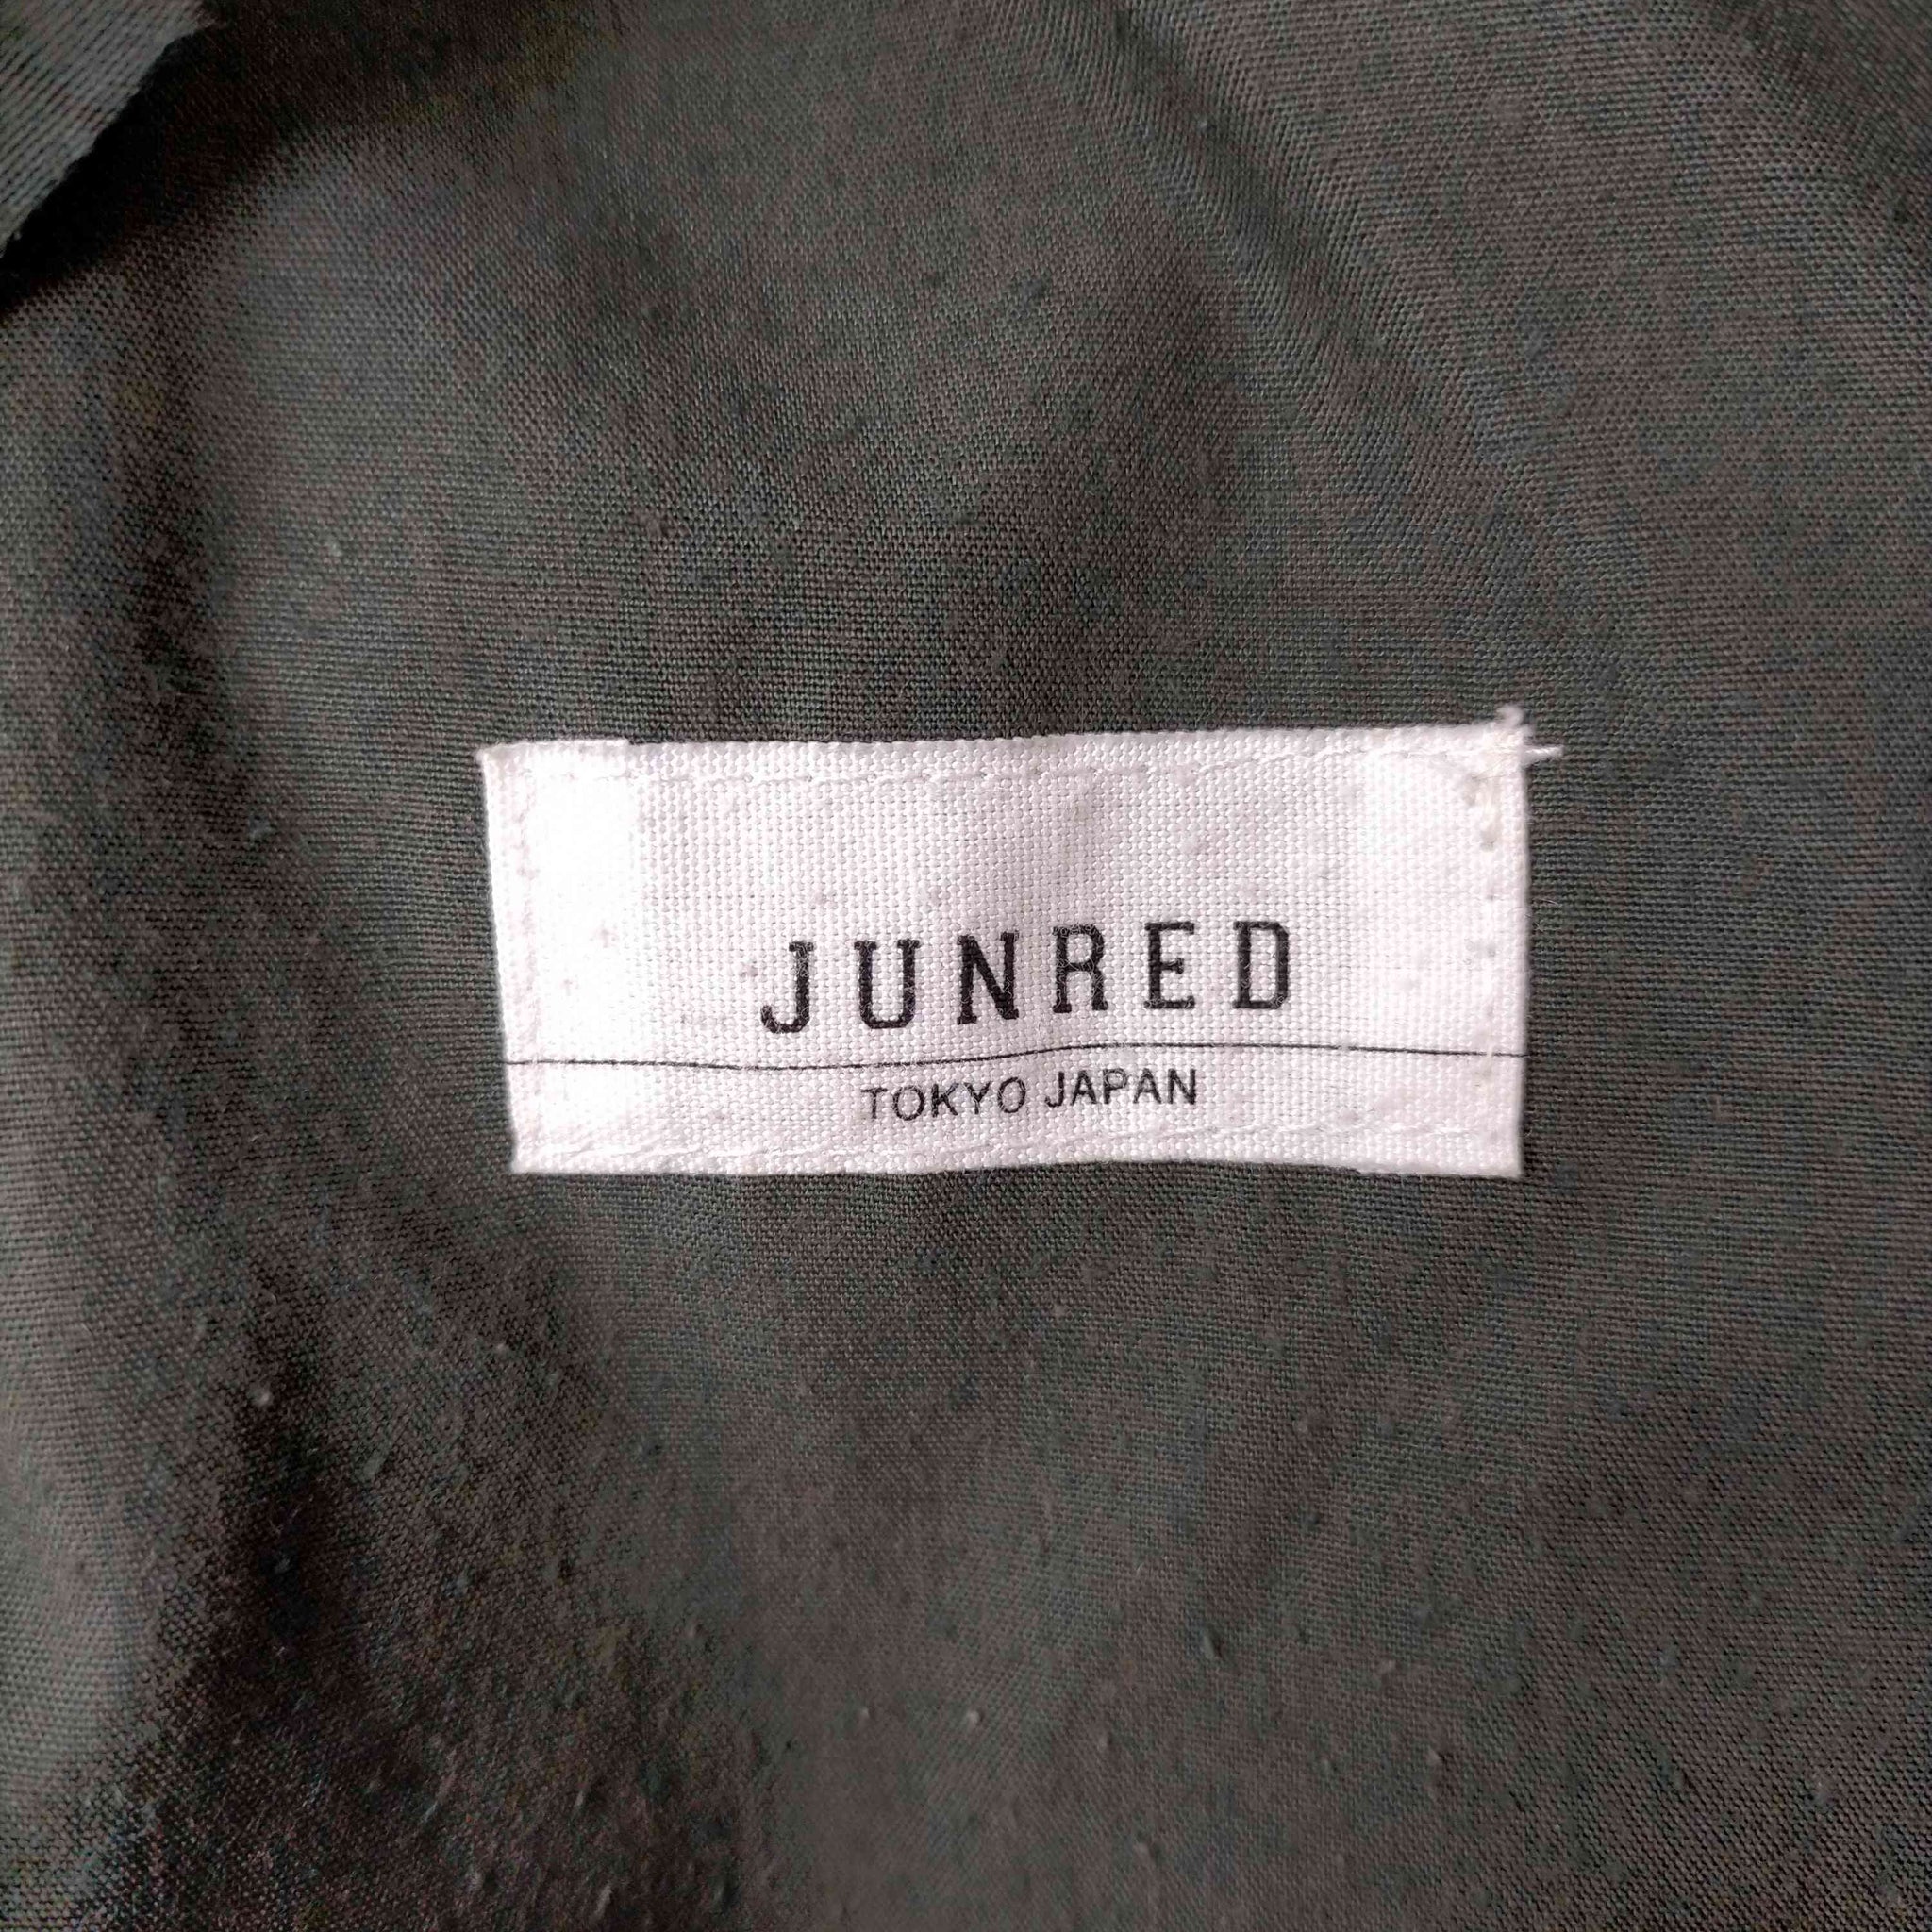 JUNRed(ジュンレッド)ヴィンテージプリントサテンワイドパンツ